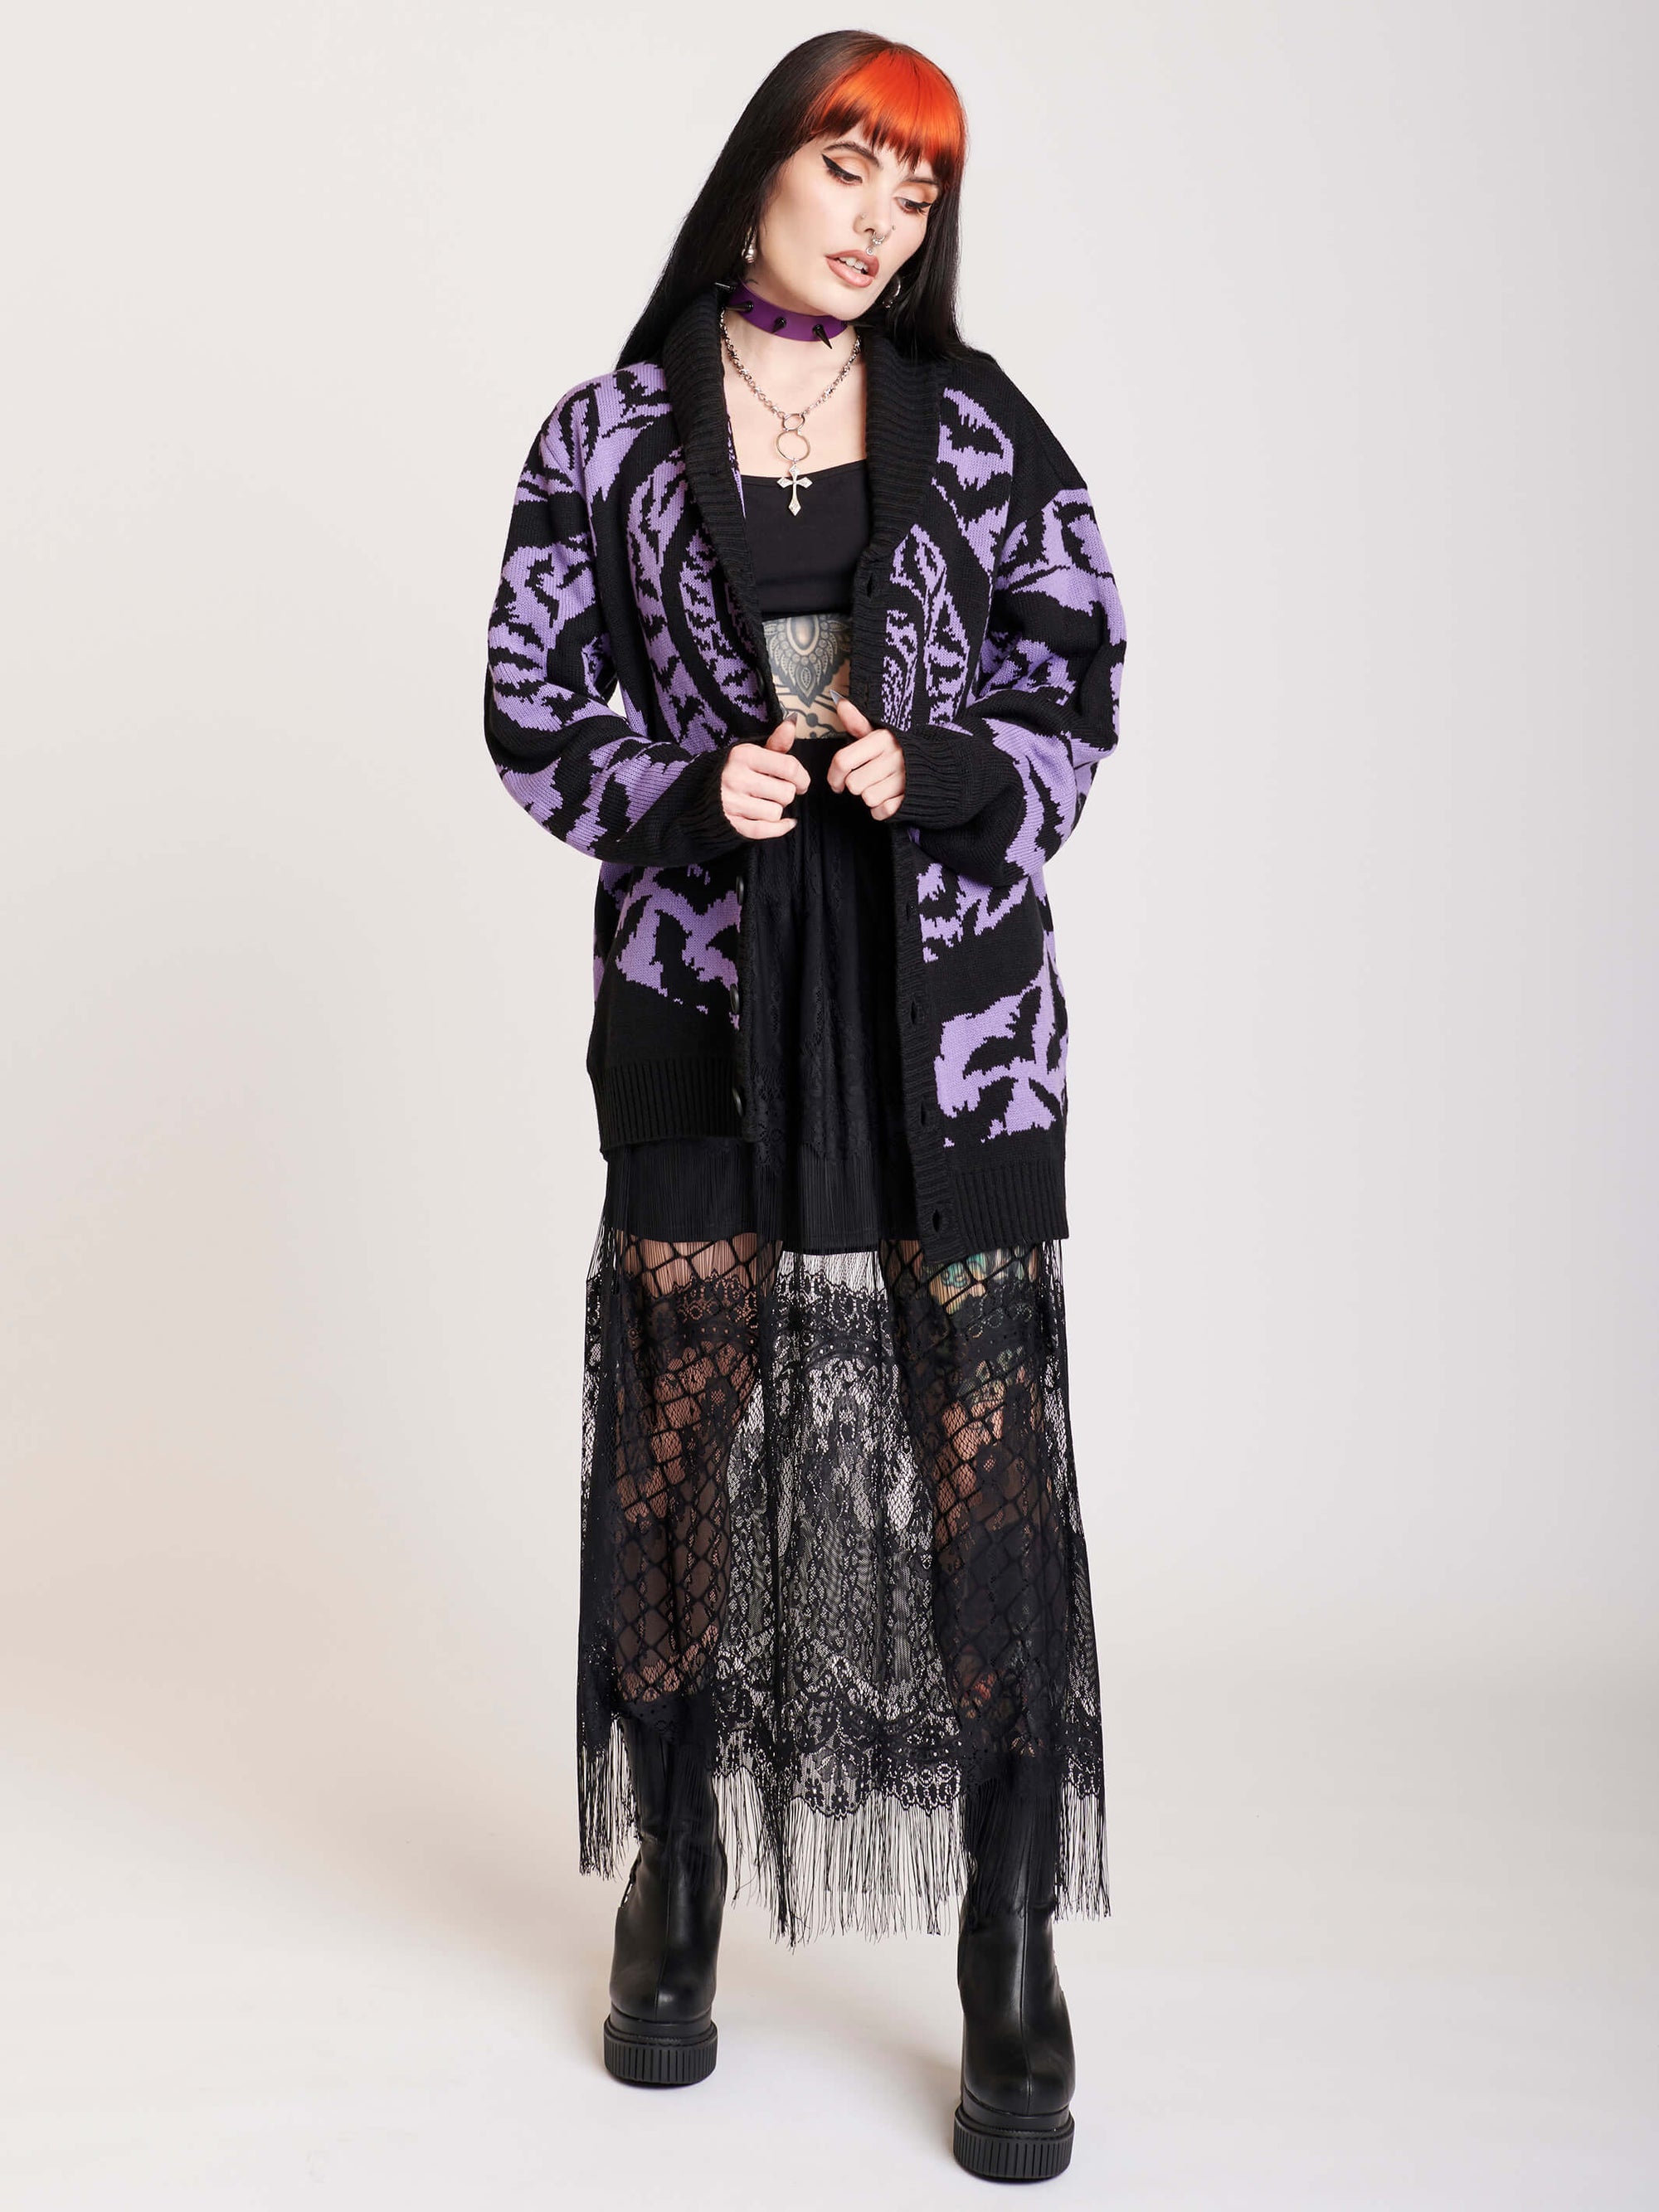 shawl collar cardigan with purple swirl and black bats in flight print